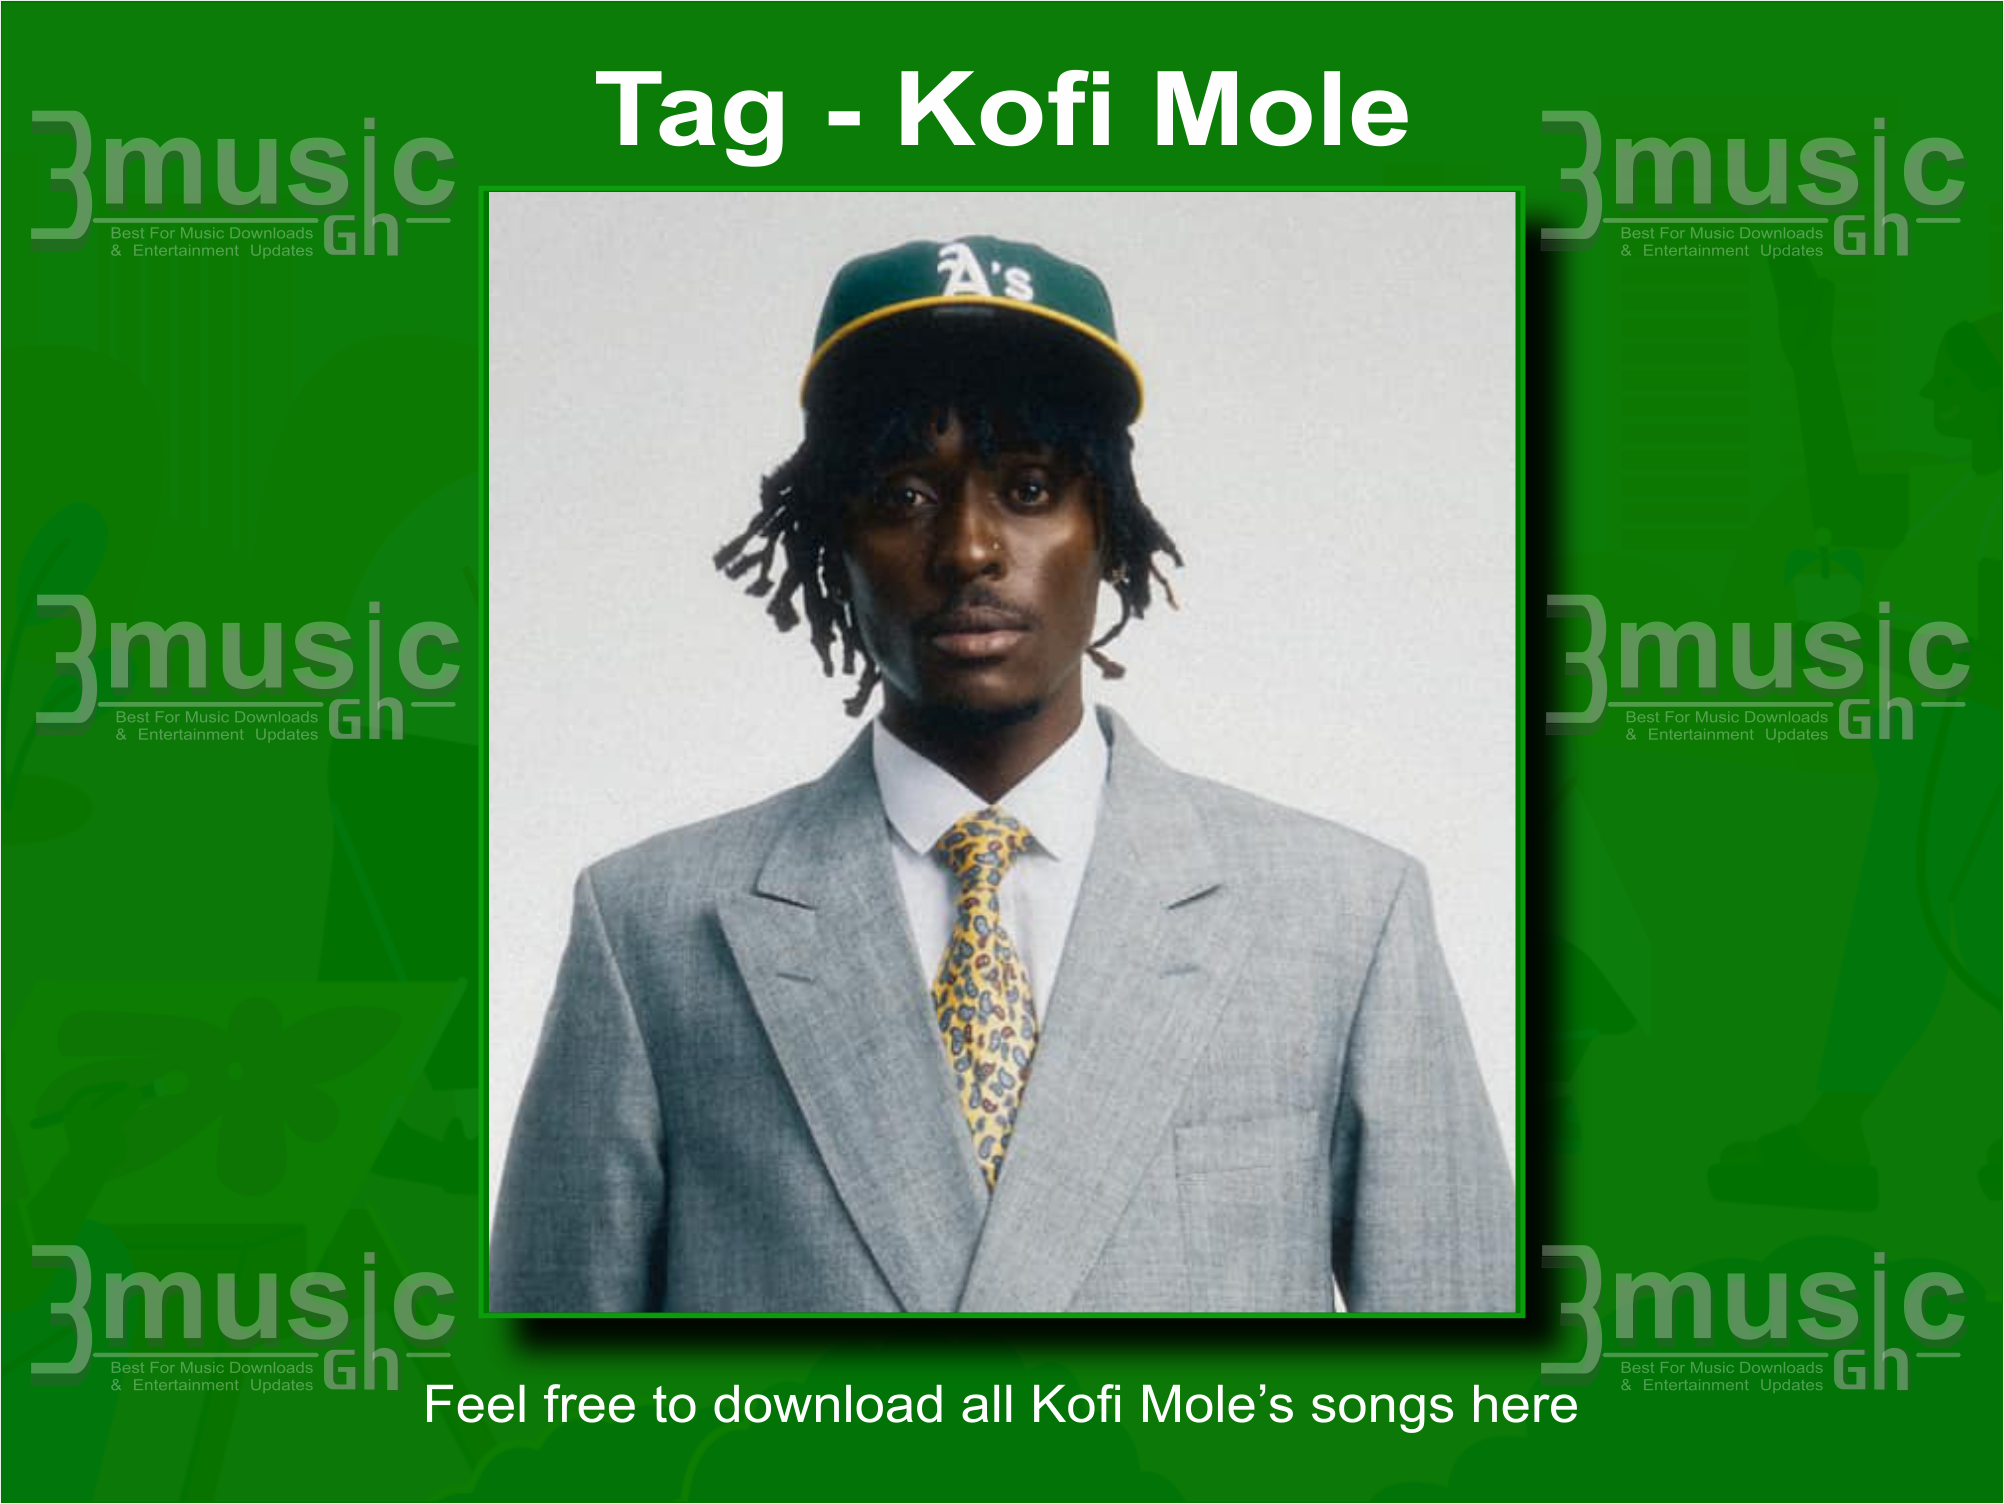 Kofi Mole Songs all download_ 3musicgh.com